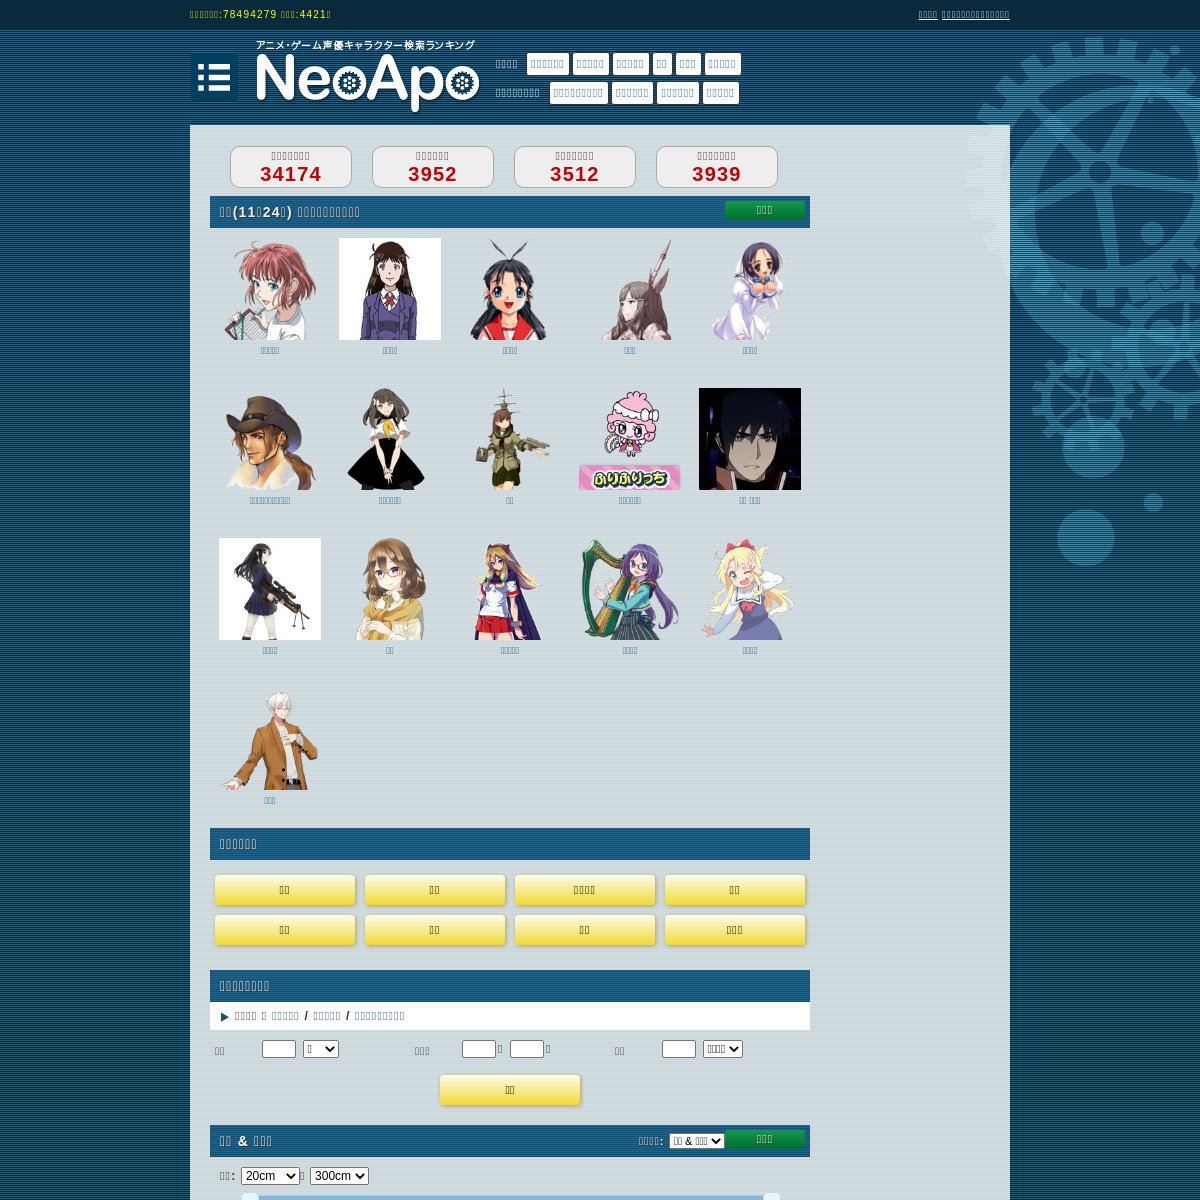 A complete backup of neoapo.com